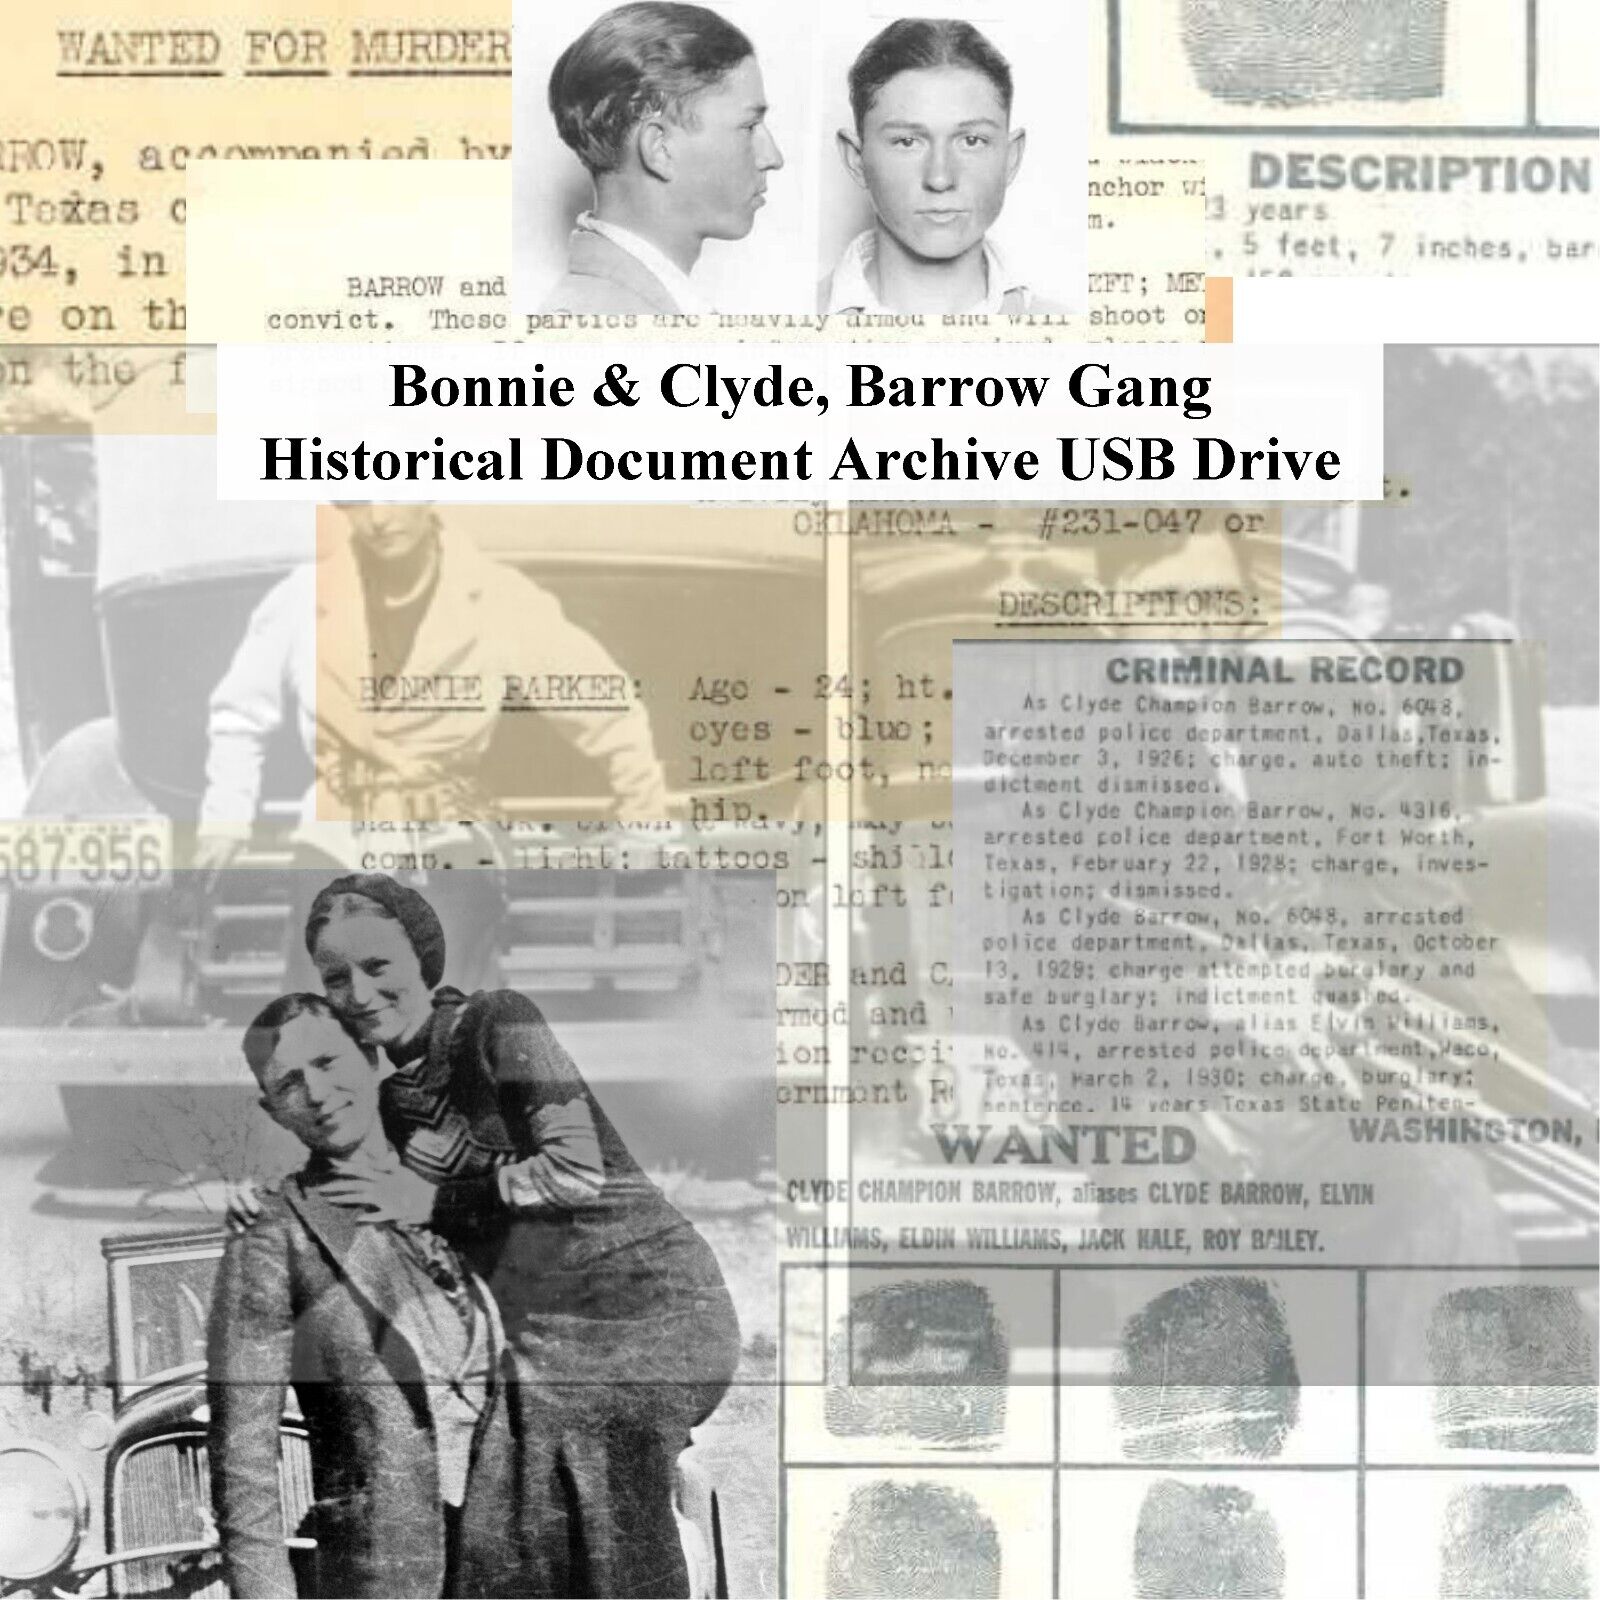 Bonnie & Clyde, Barrow Gang Historical Document Archive USB Drive